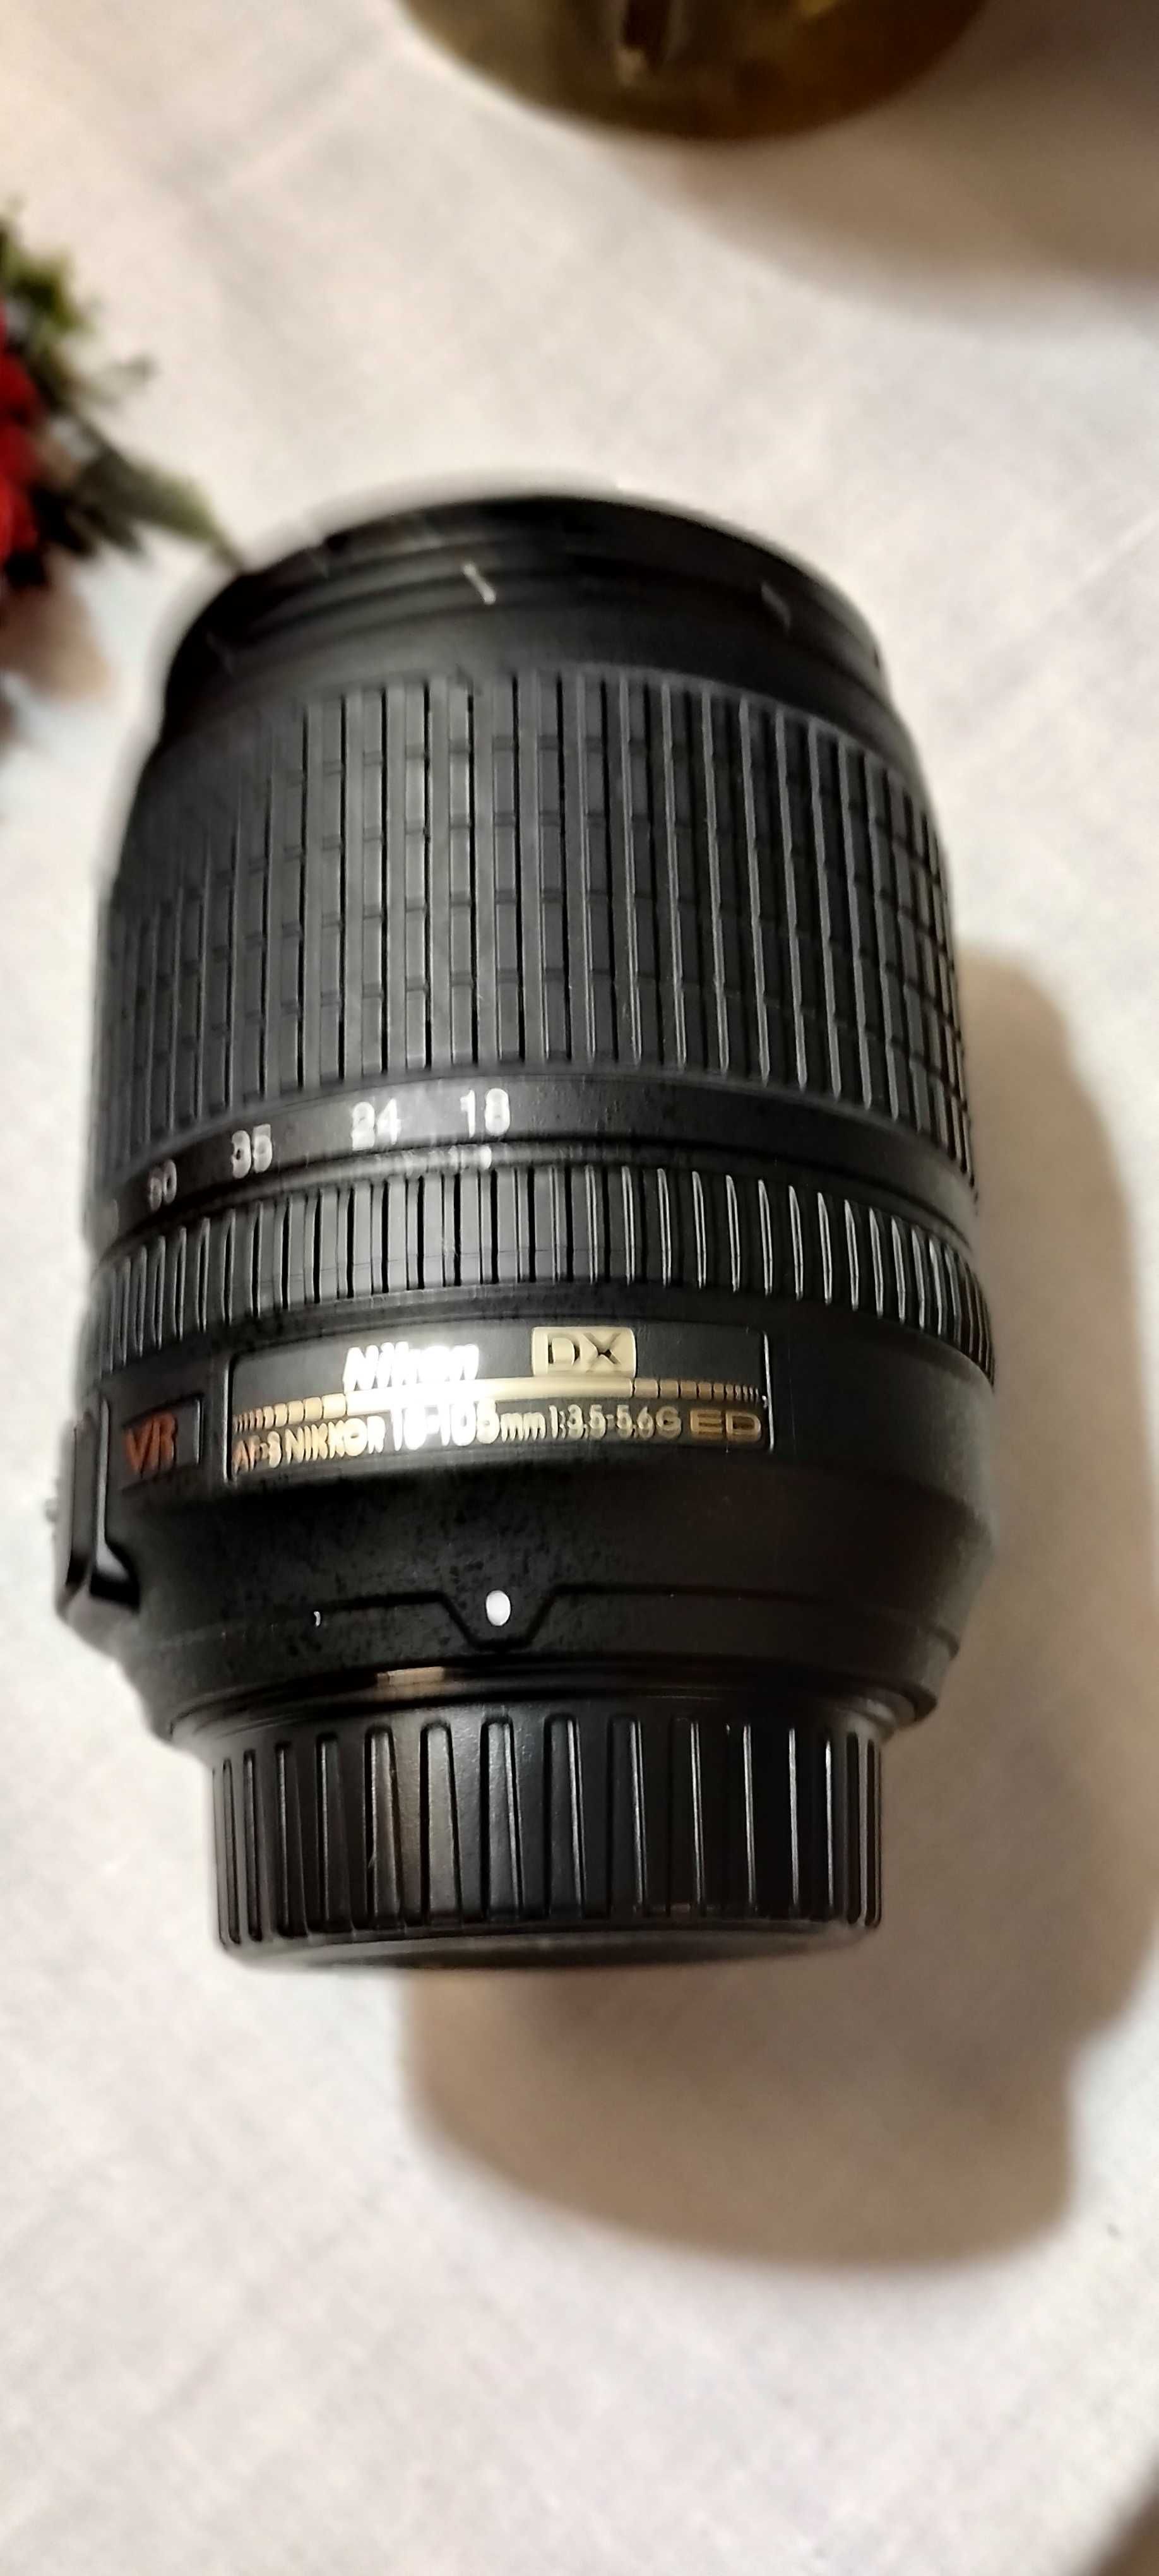 Máquina fotográfica Nikon D3100 kit completo